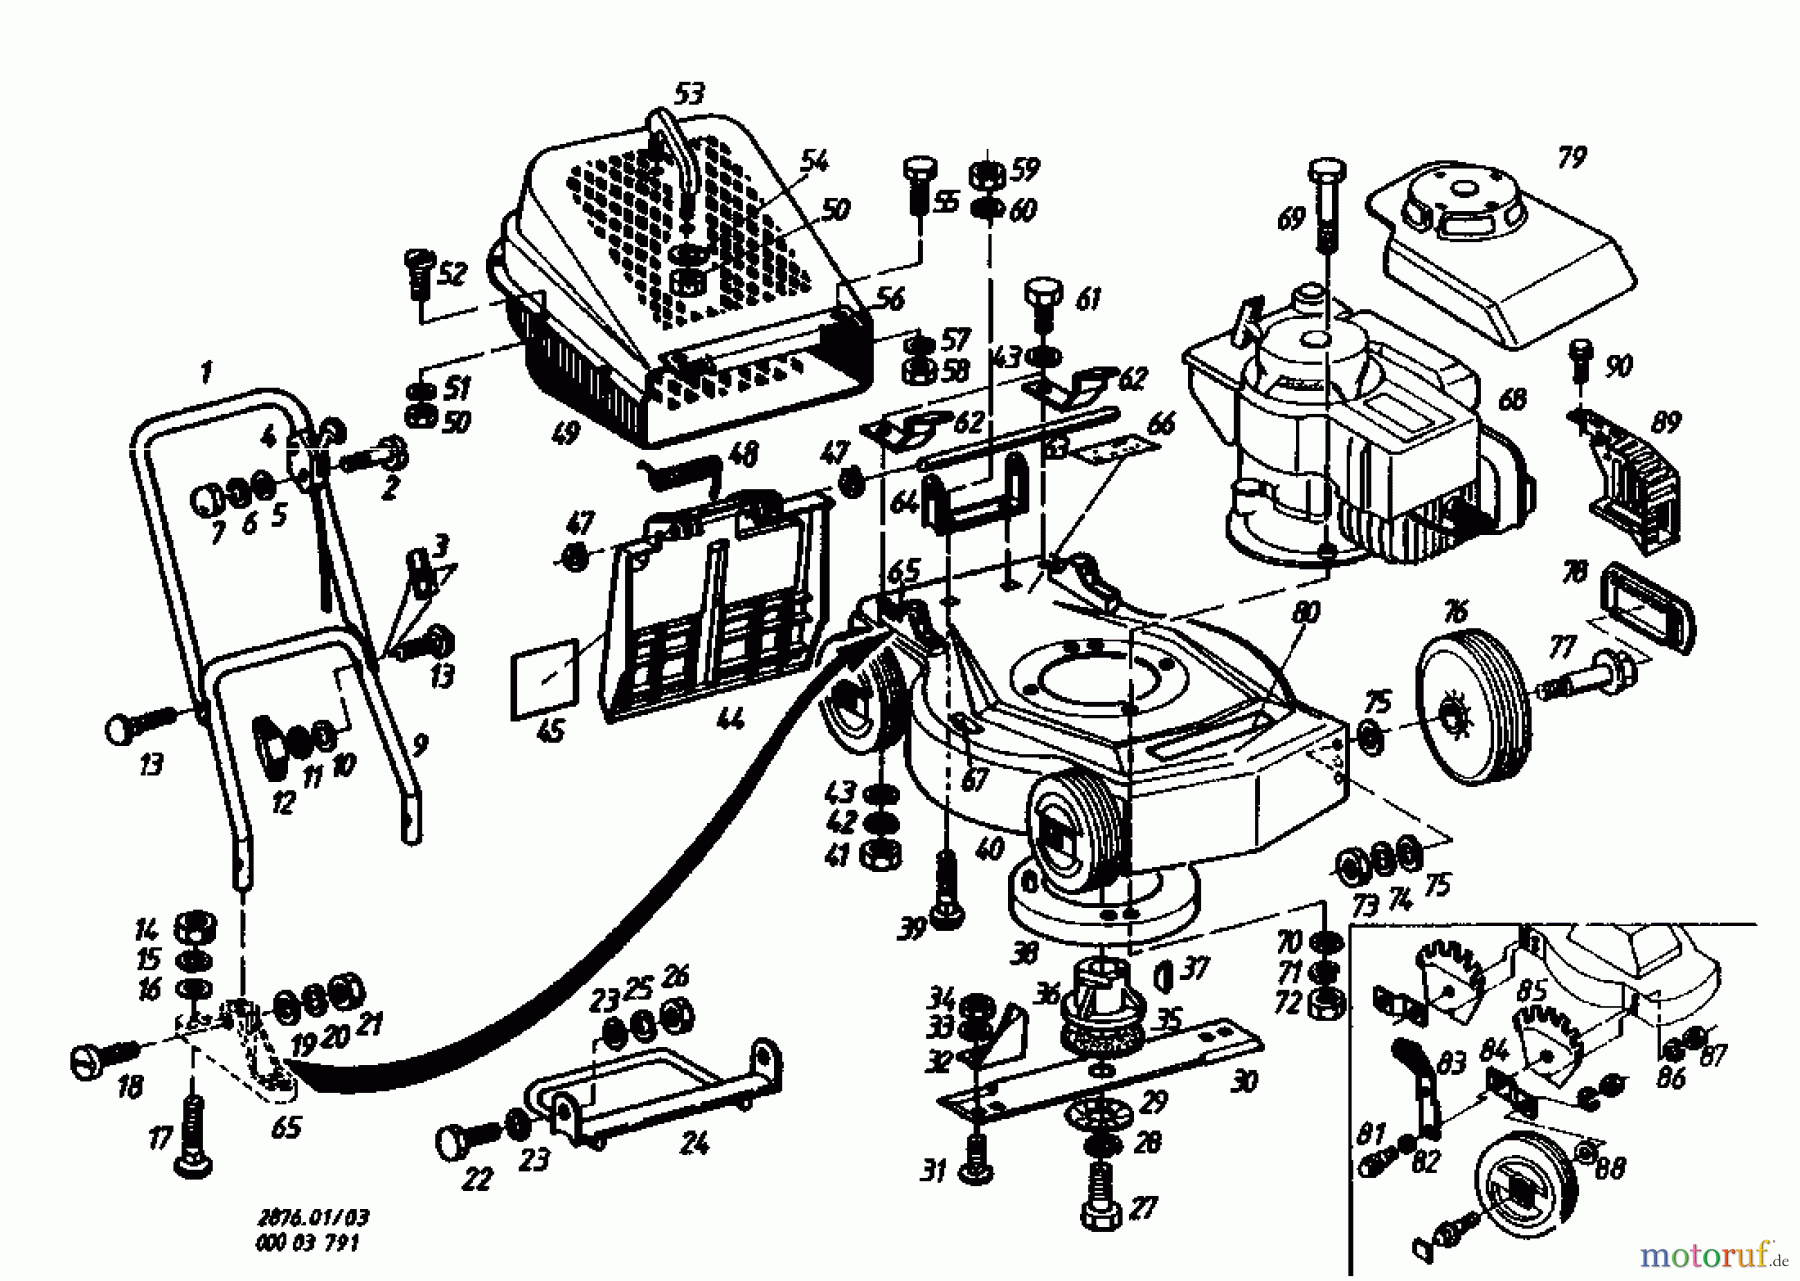  Gutbrod Petrol mower TURBO 45 B 02876.01  (1985) Basic machine